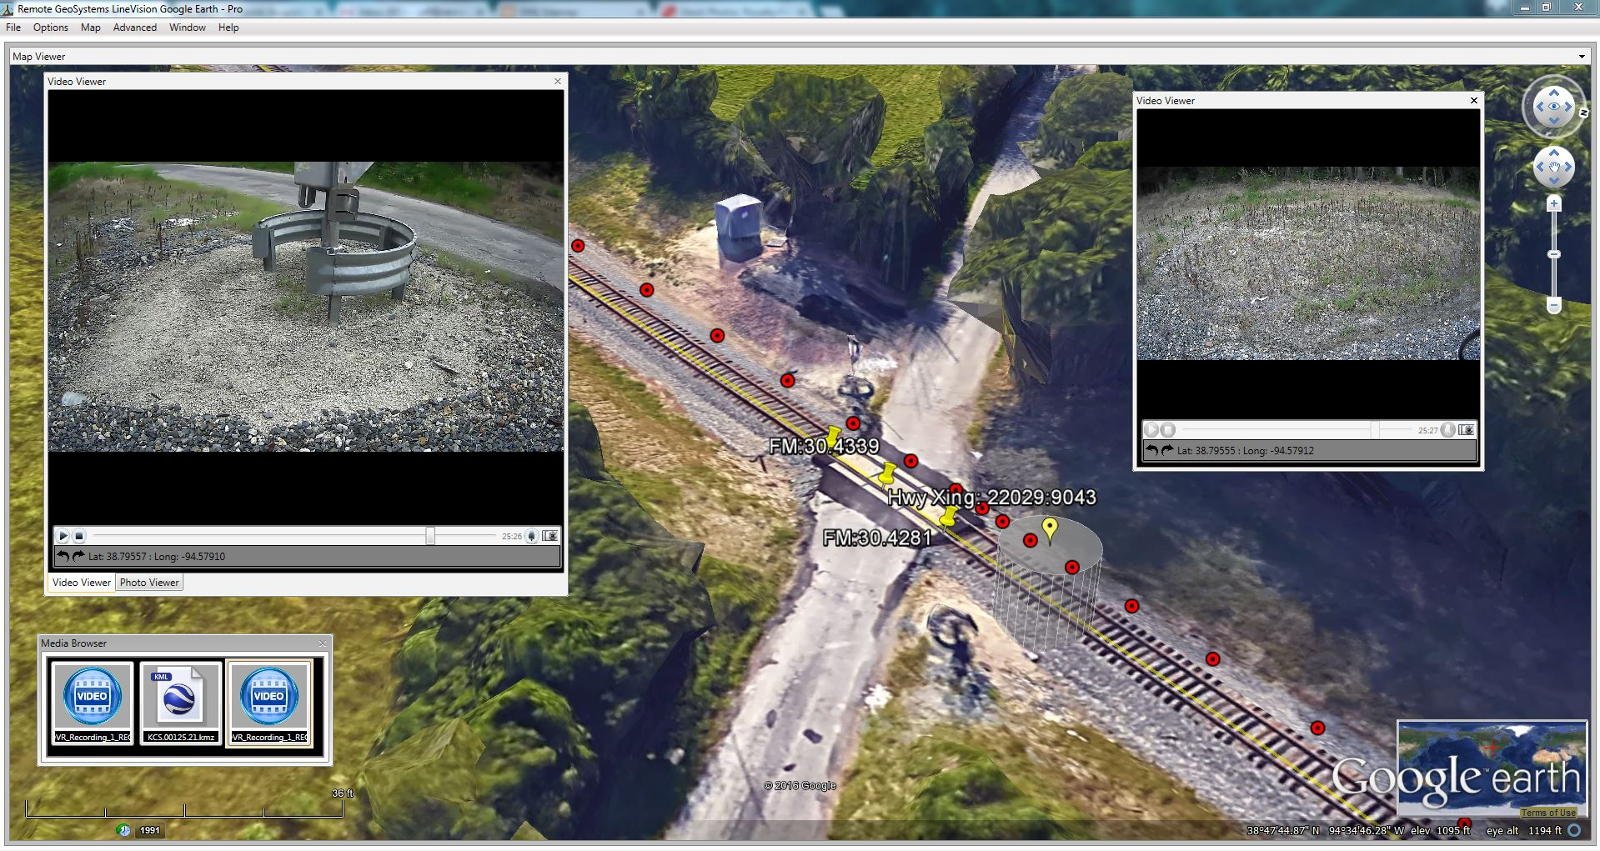 geoDVR Rail PTC Video Survey System